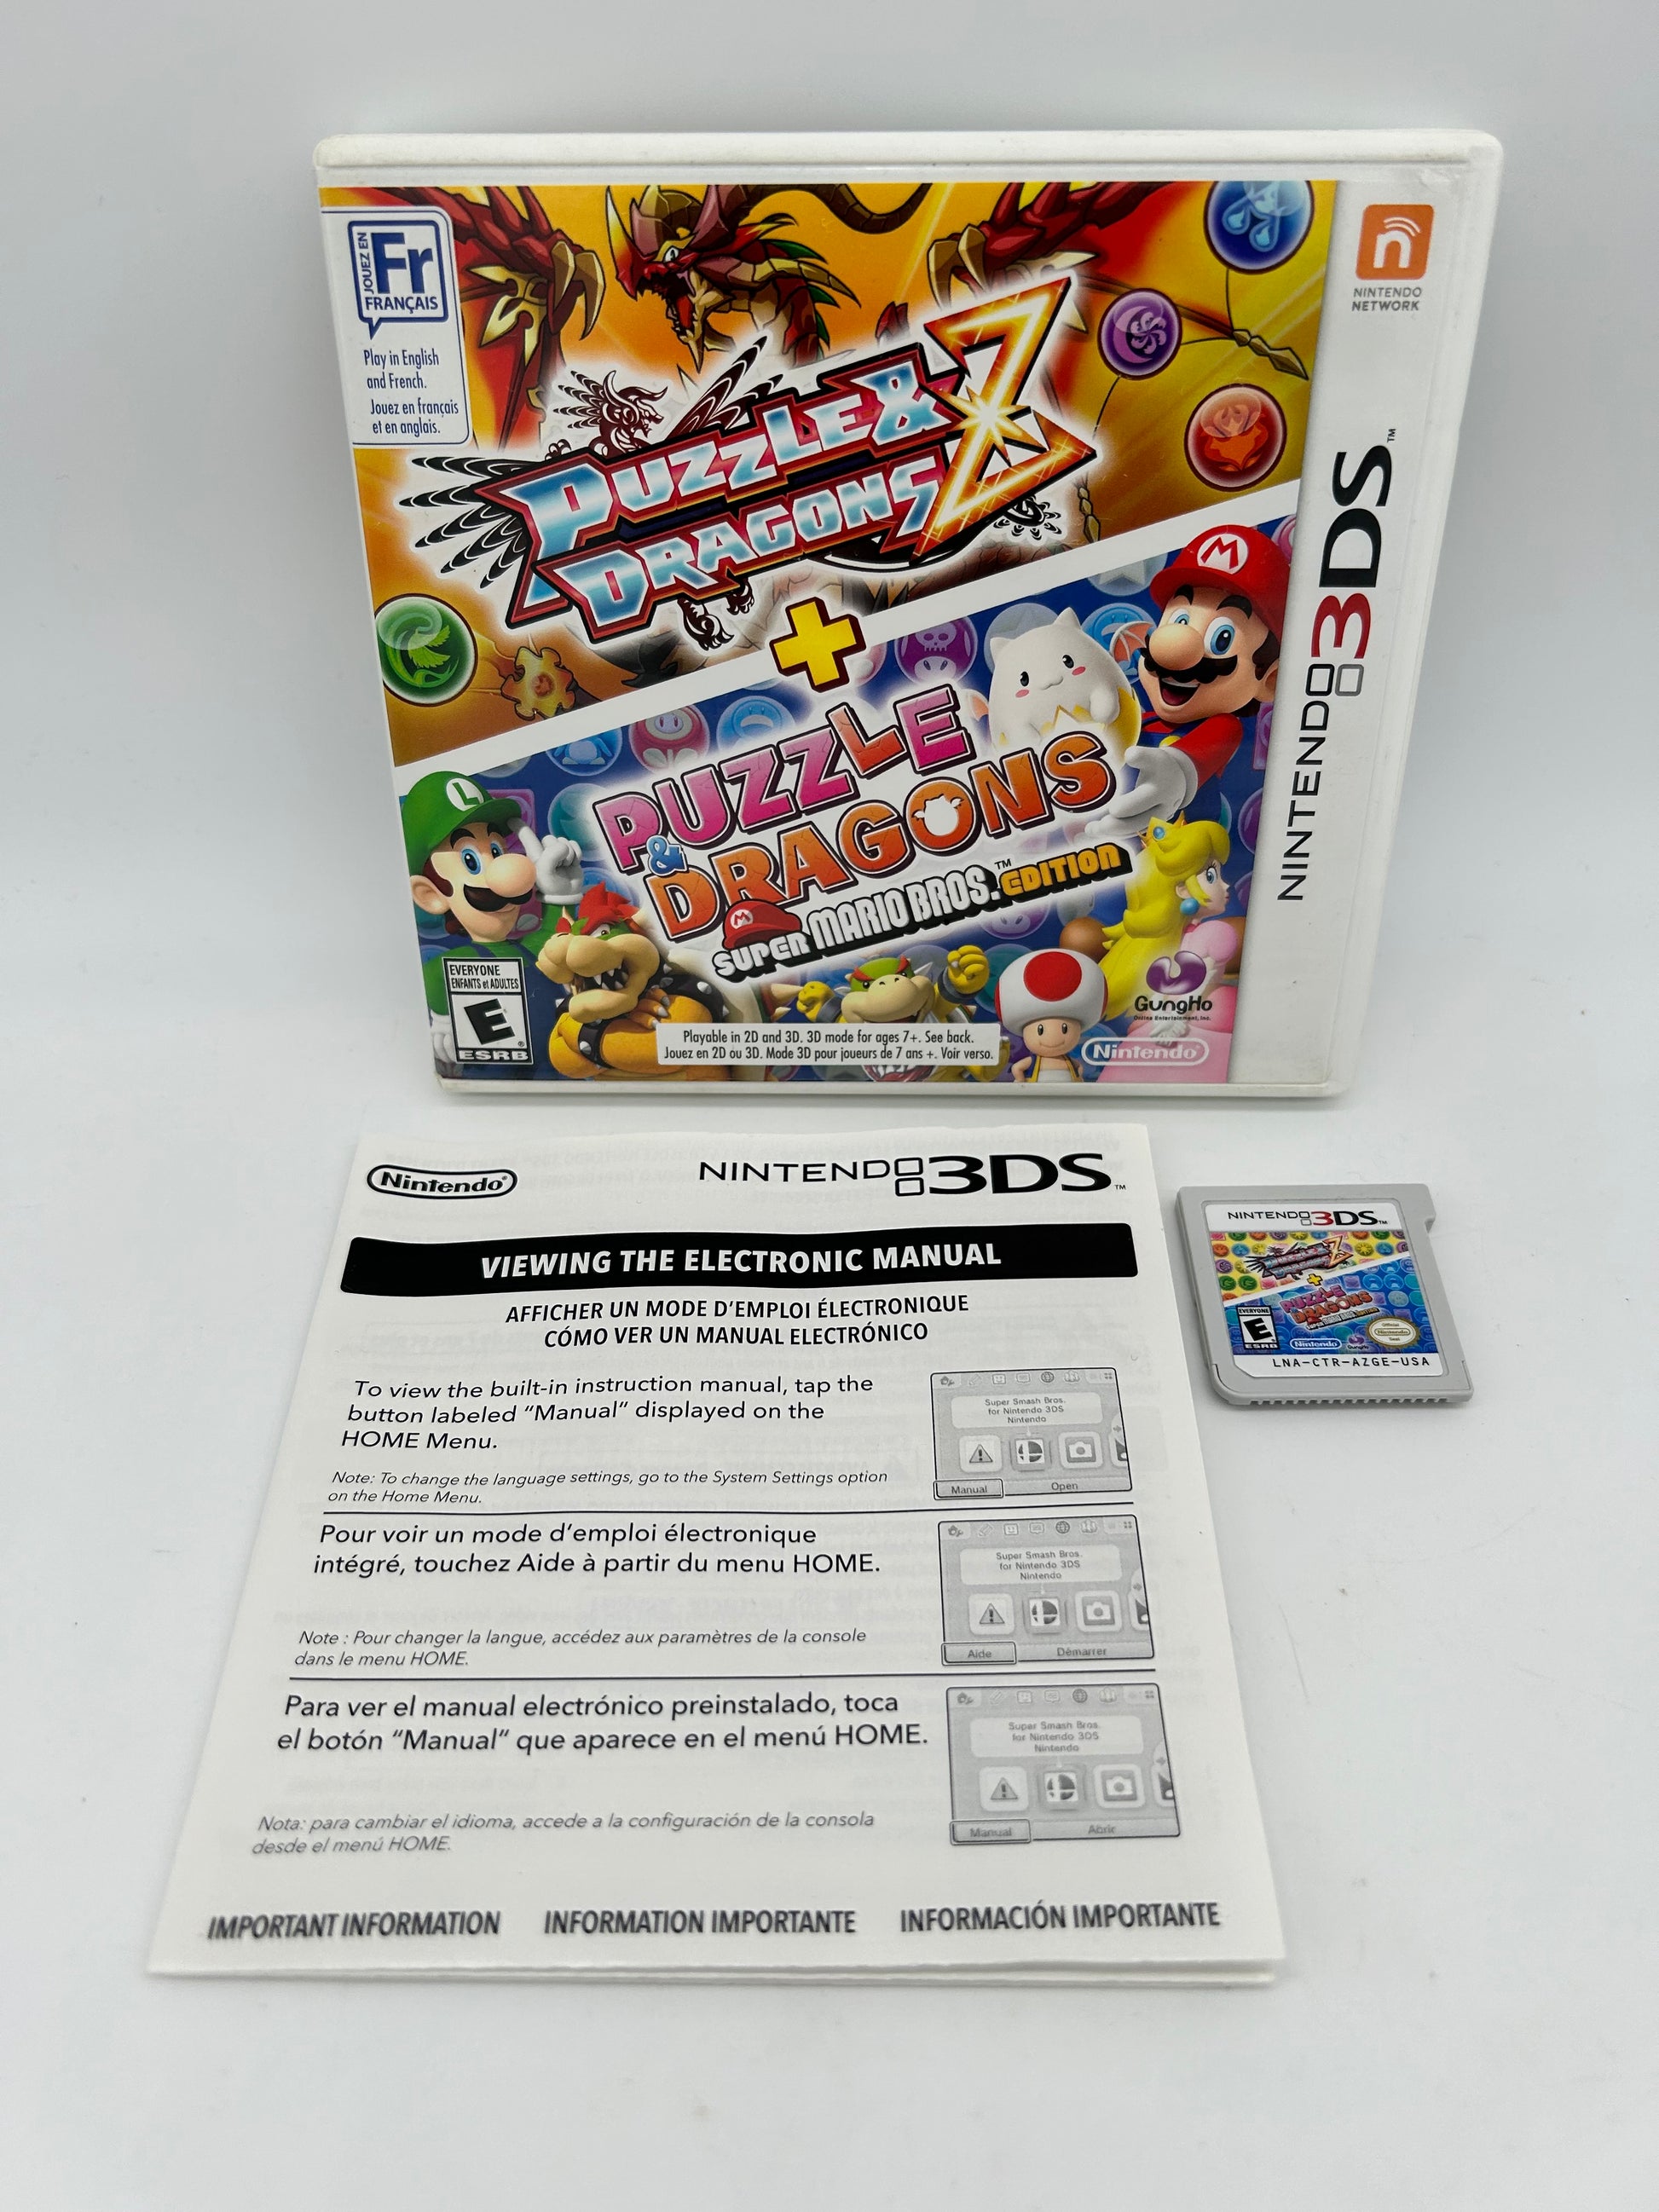 PiXEL-RETRO.COM : NINTENDO 3DS (3DS) COMPLETE CIB BOX MANUAL GAME NTSC PUZZLE & DRAGONS Z + SUPER MARIO BROS EDITION